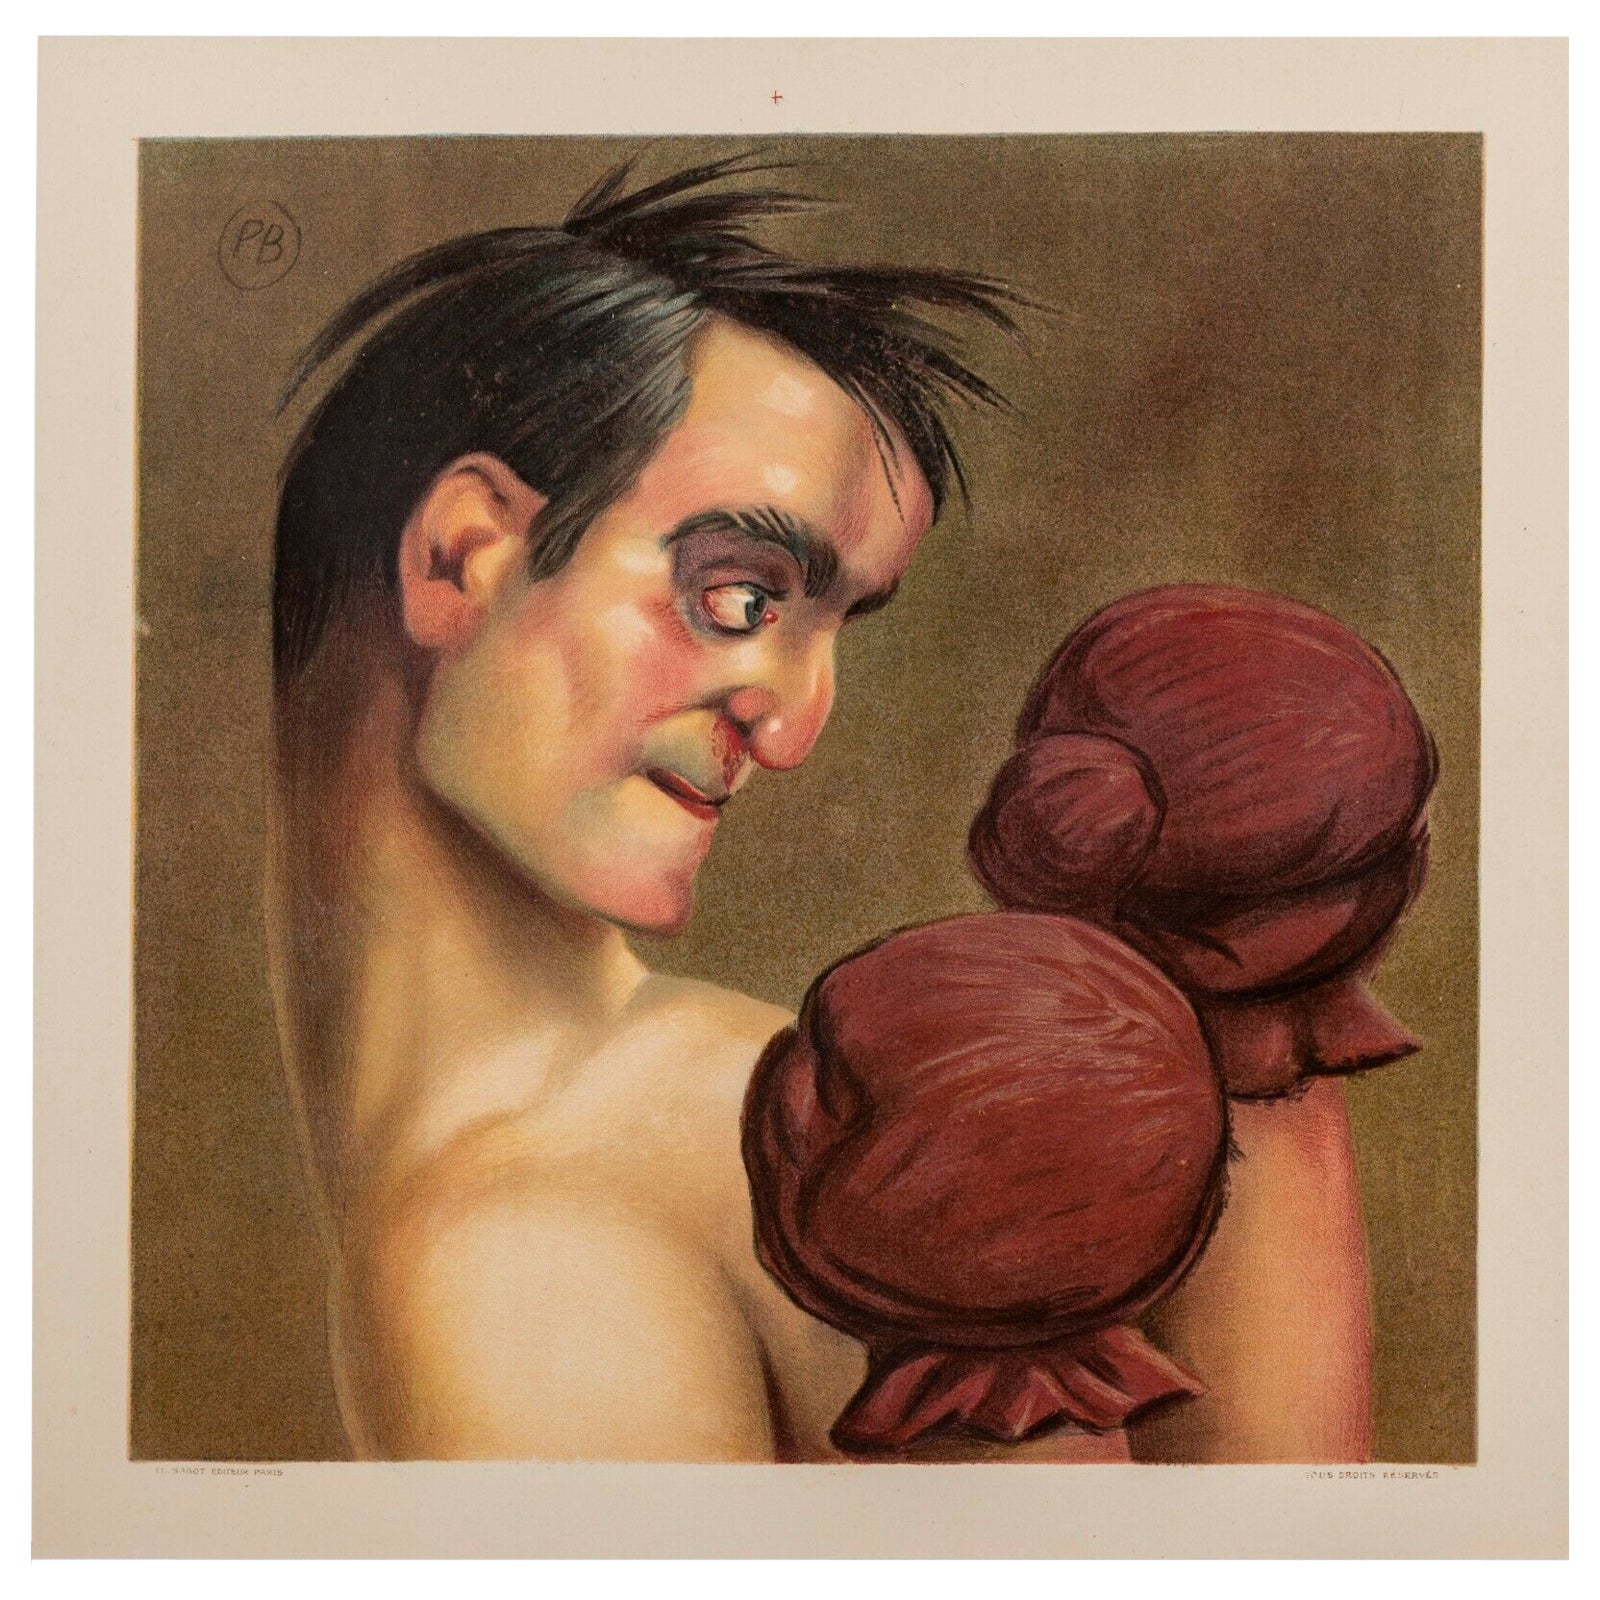 Original Vintage Boxing Poster-Paul Baroni-Boxer-Caricature -1910 For Sale